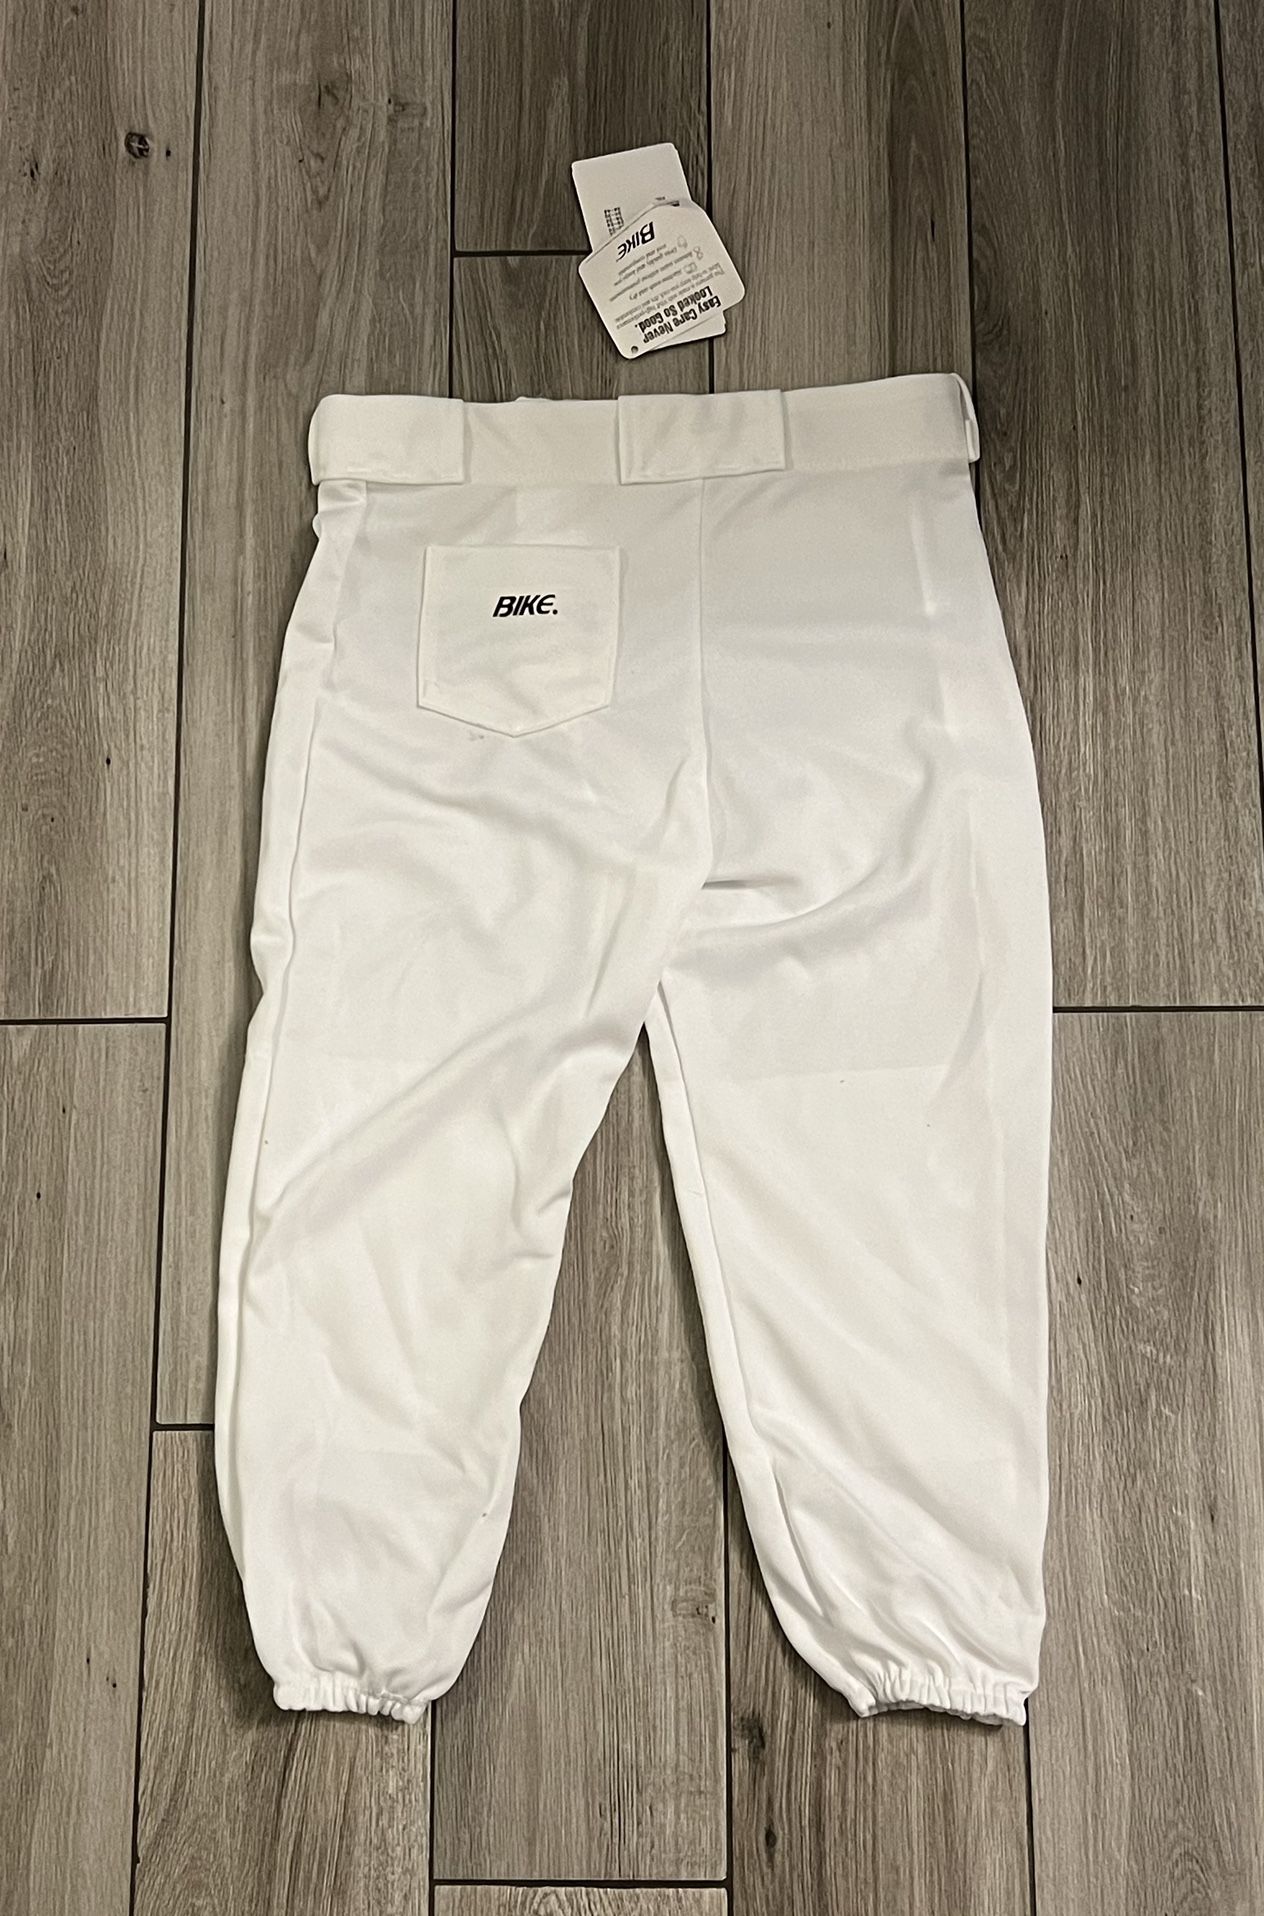 Bike Athletic Style 3708 White Youth Baseball Pants w/Belt Loops Size Large NEW